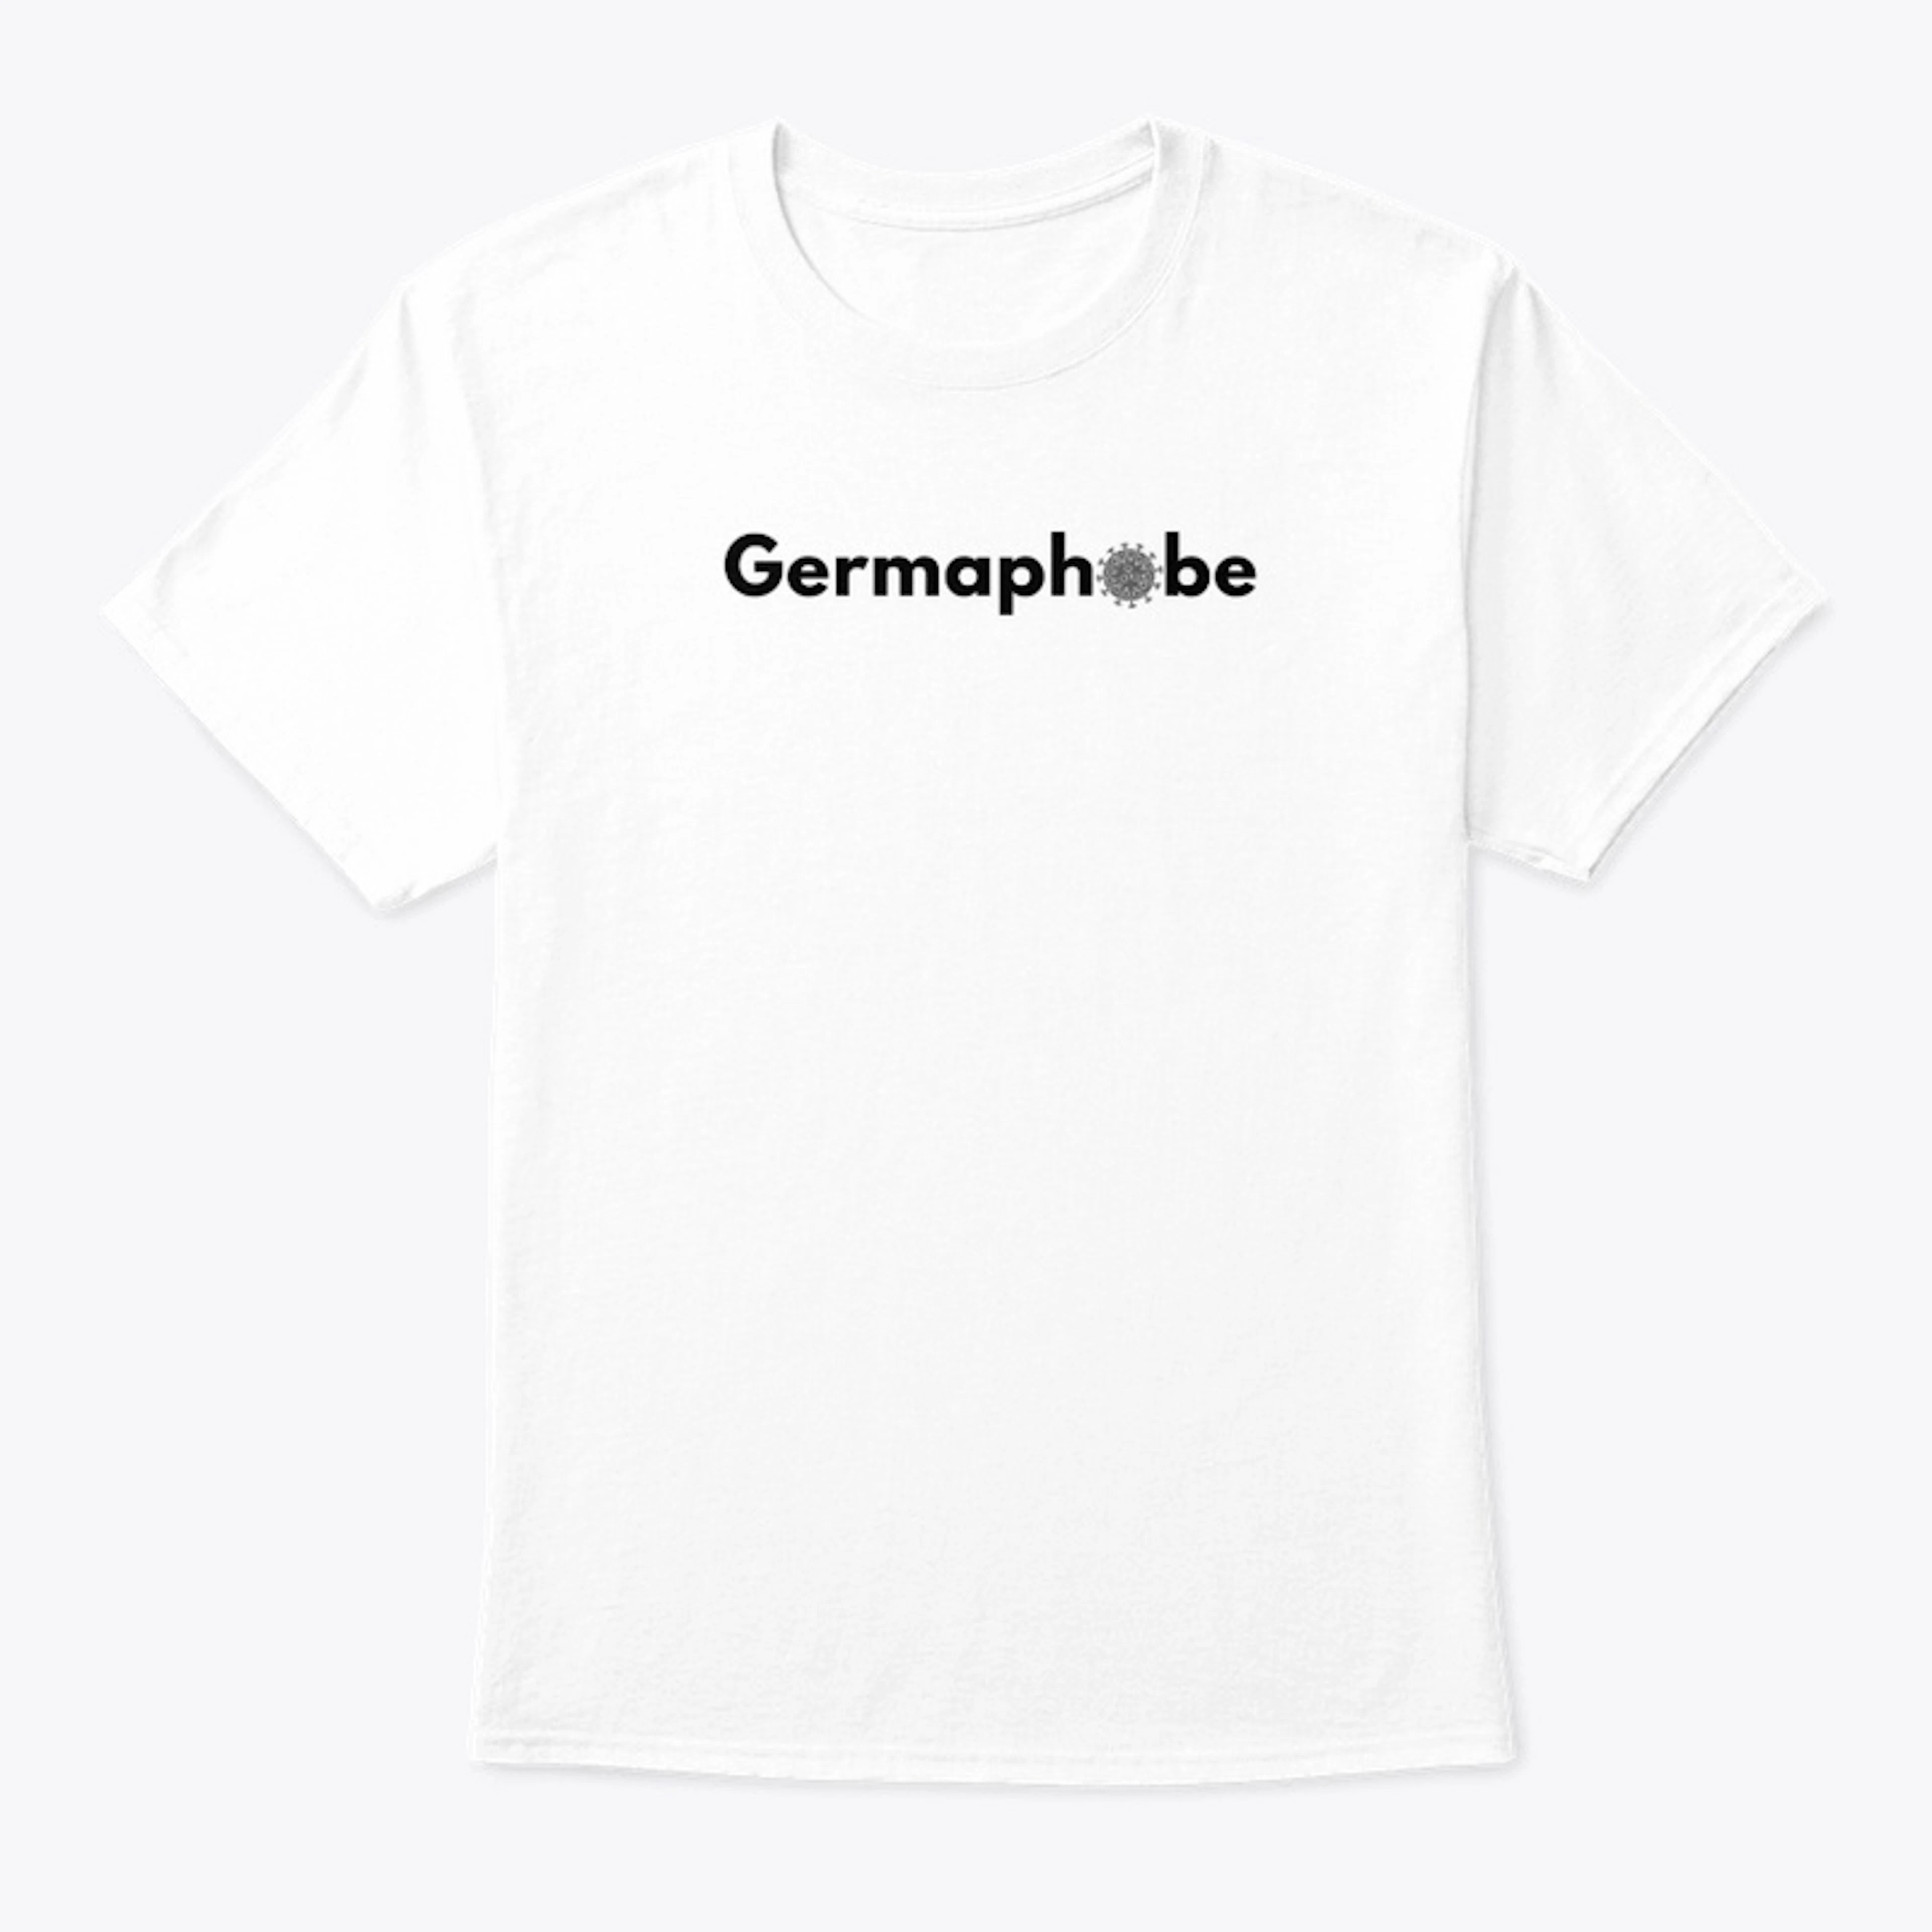 Germaphobe